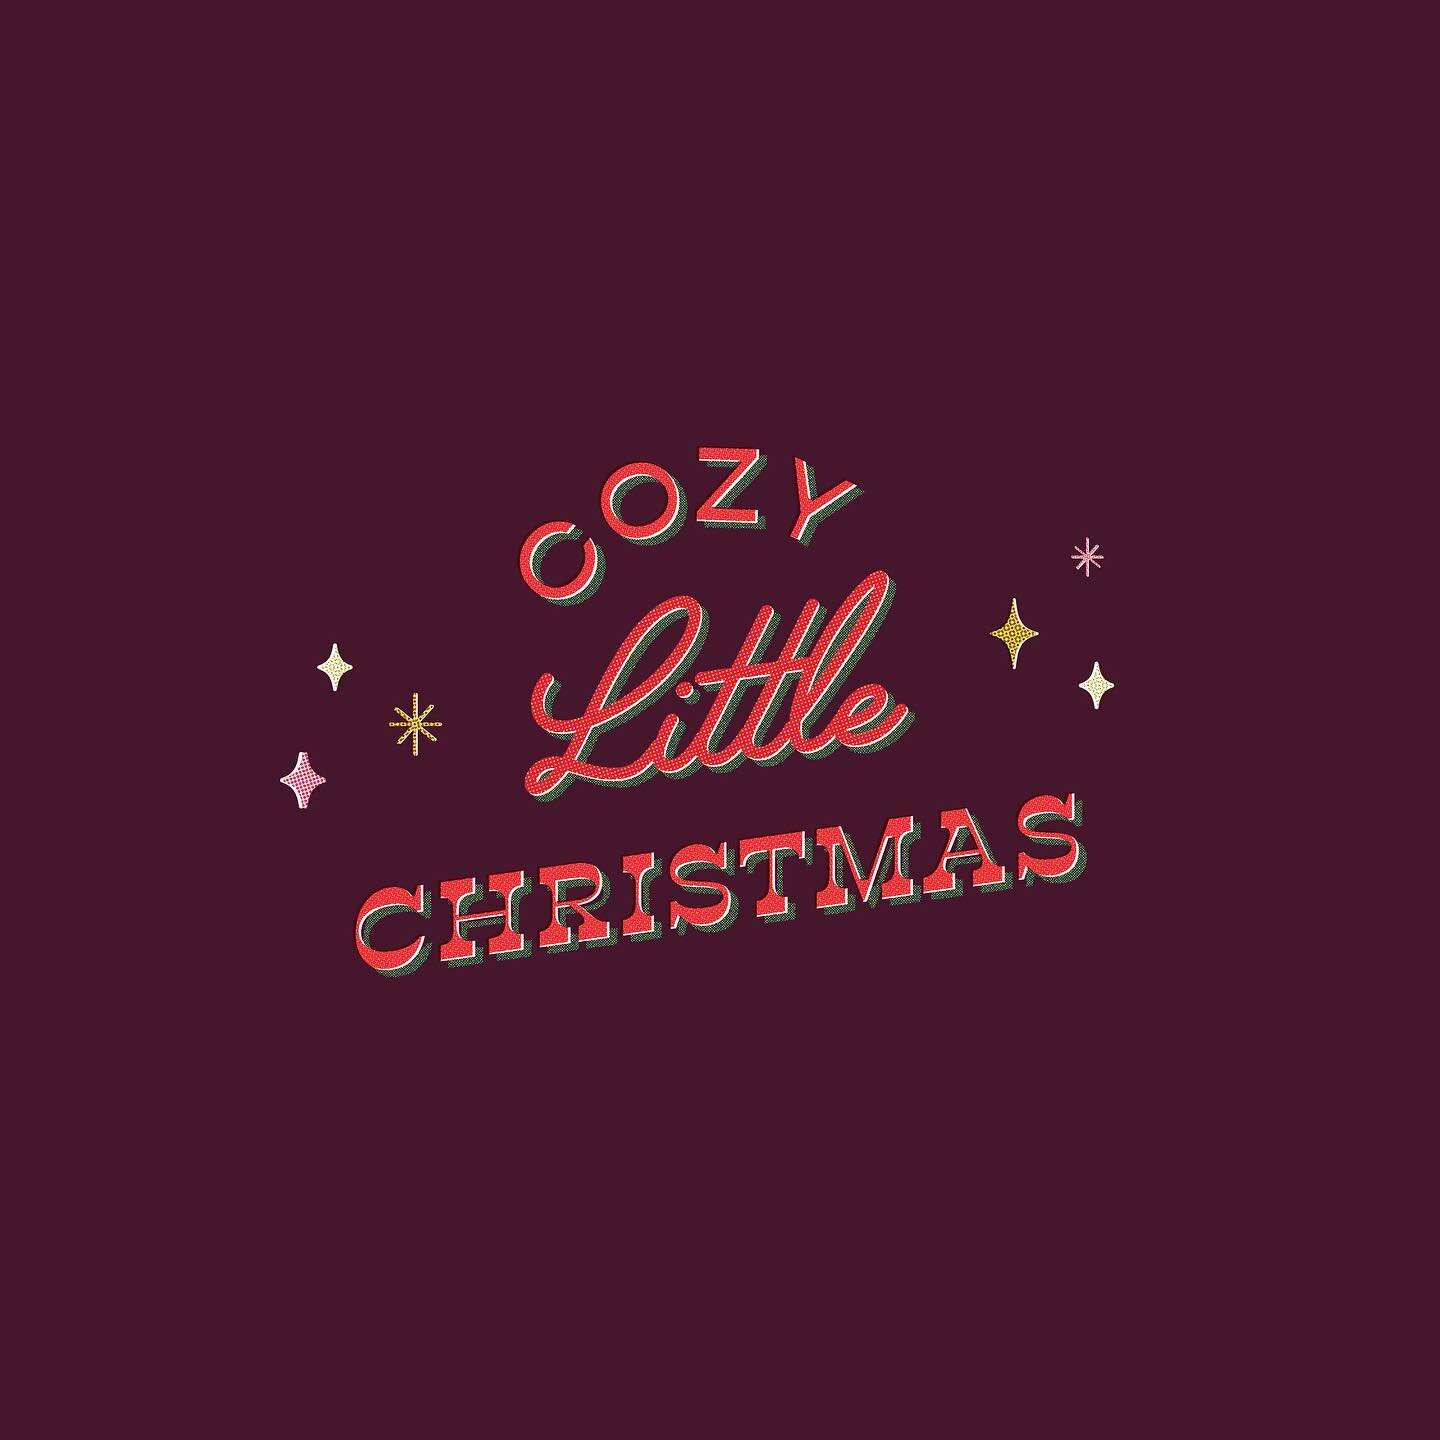 Wishing you a cozy little Christmas!✨🎄